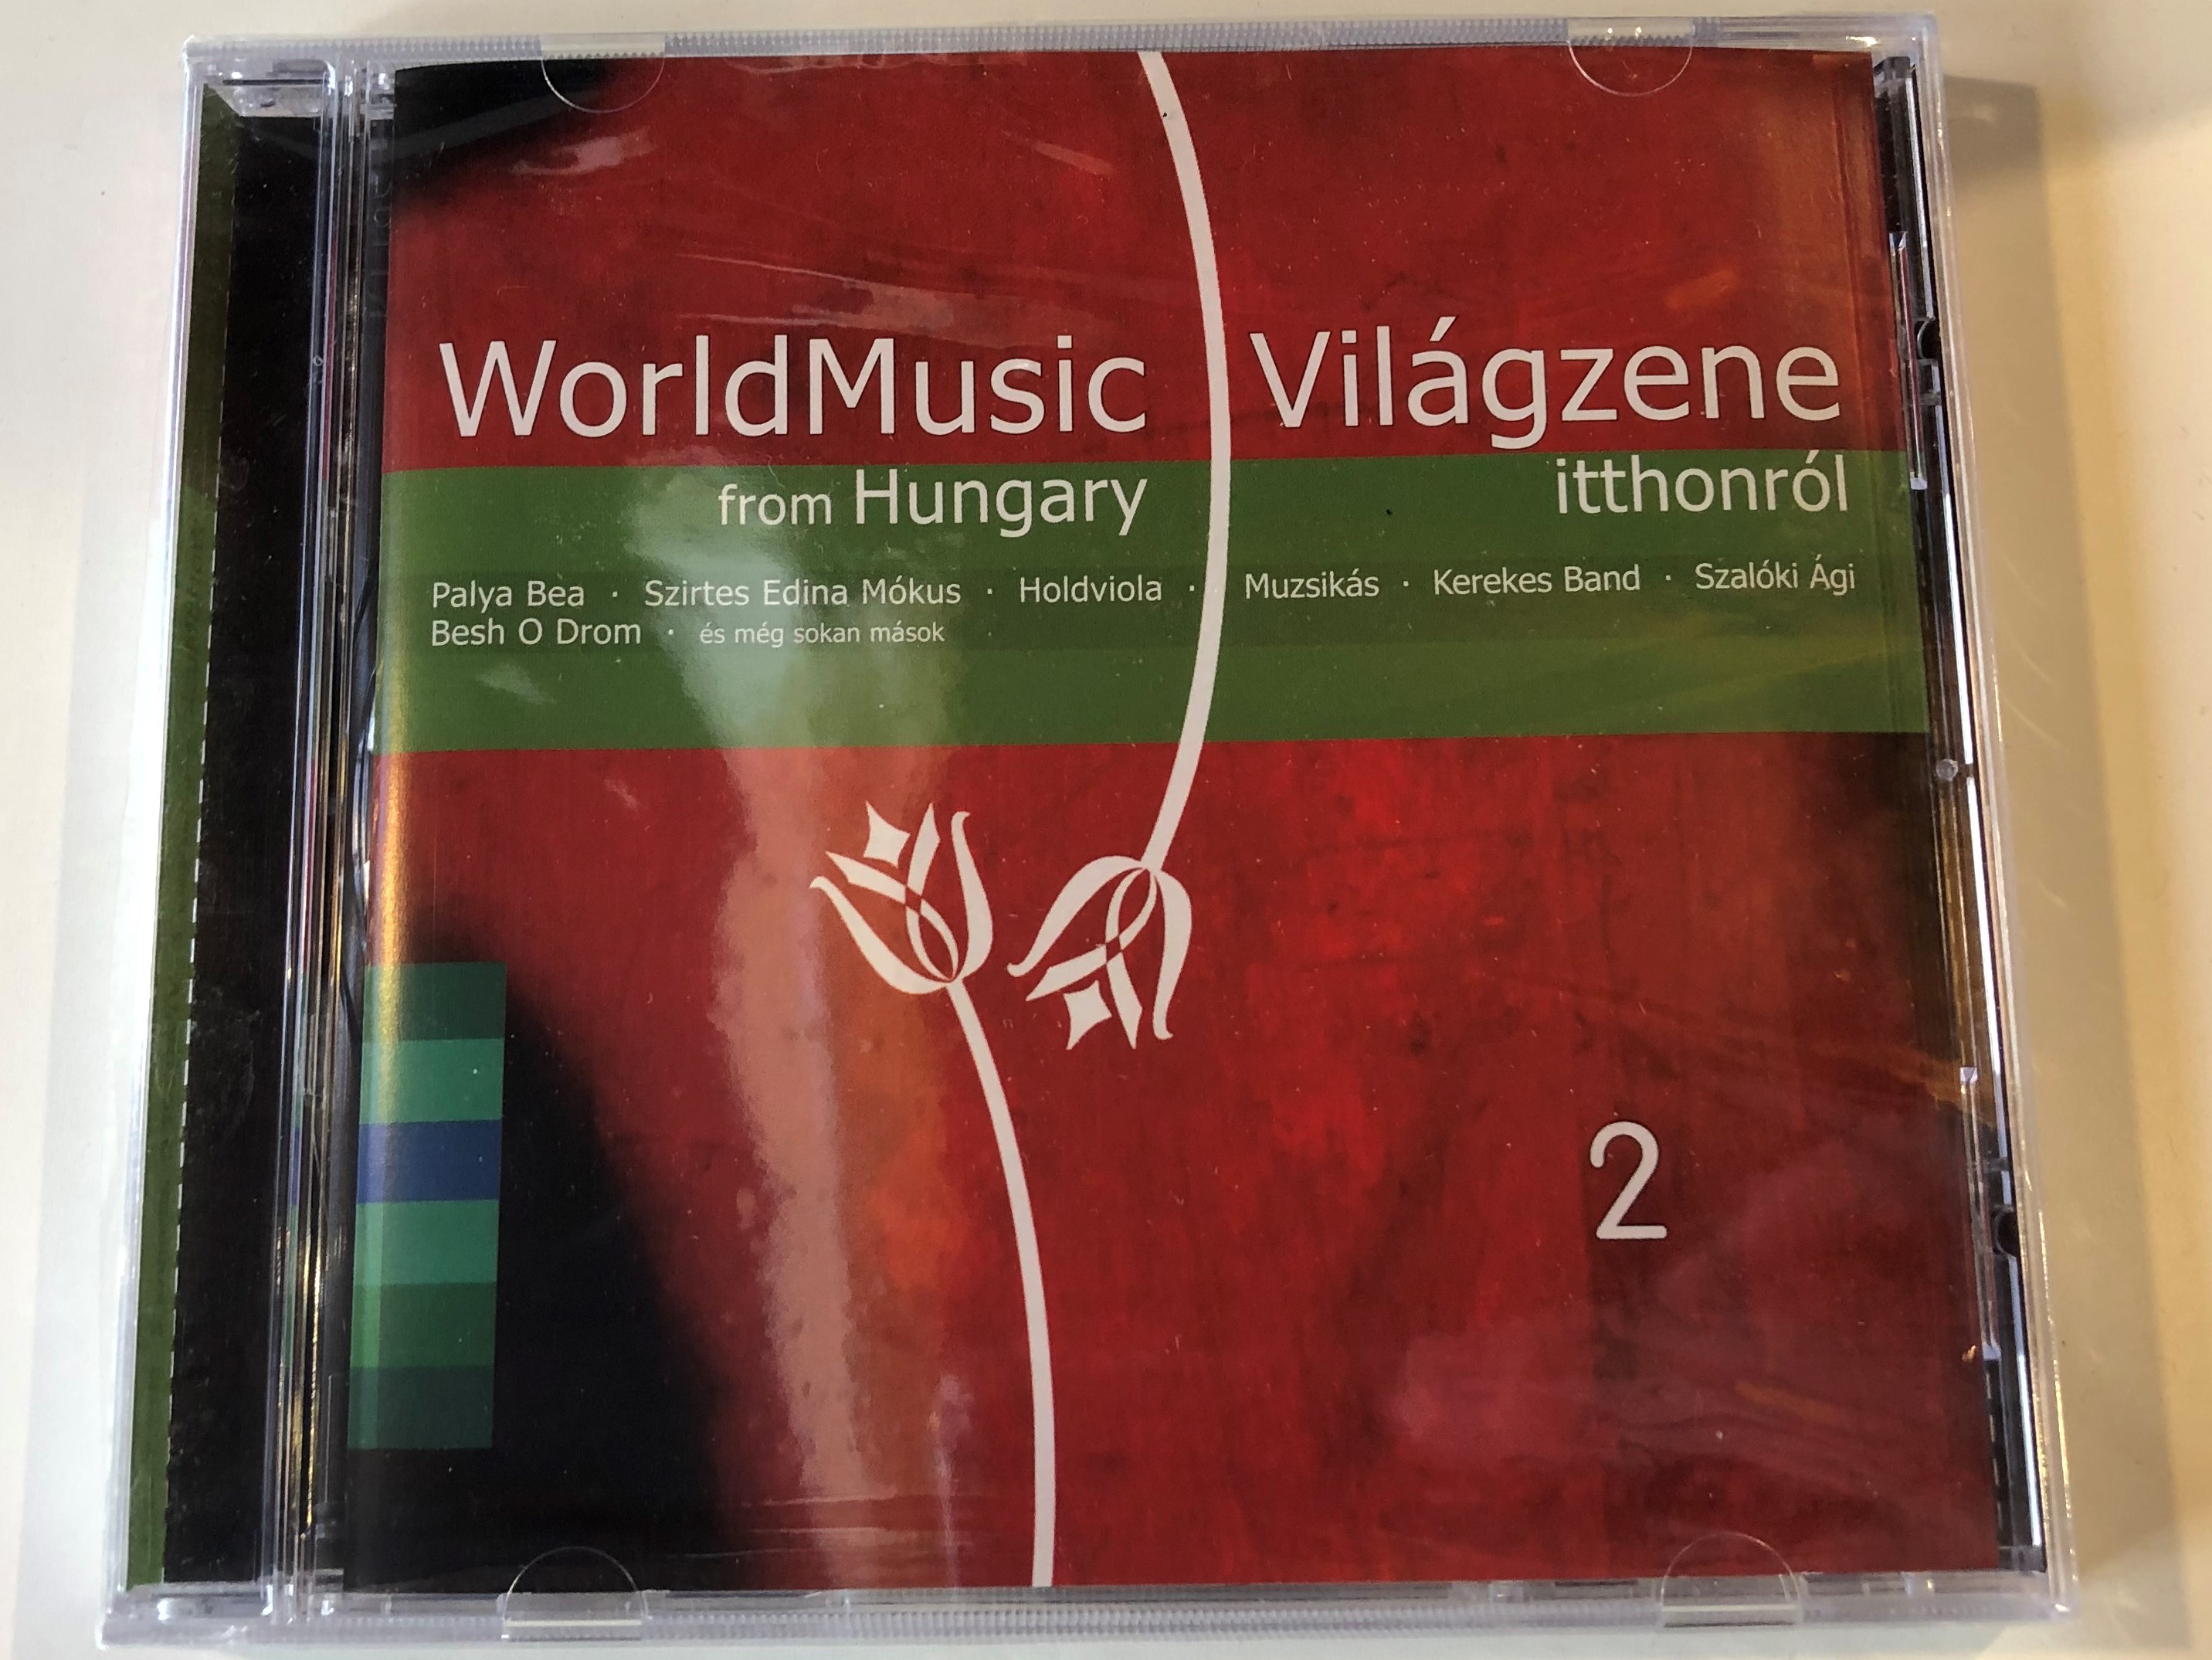 world-music-from-hungary-2-vilagzene-itthonrol-2-palya-bea-szirtes-edina-m-kus-holdviola-muzsik-s-kerekes-band-szal-ki-gi-besh-o-drom-es-meg-sokan-masok-sony-music-audio-cd-2010-8869-1-.jpg